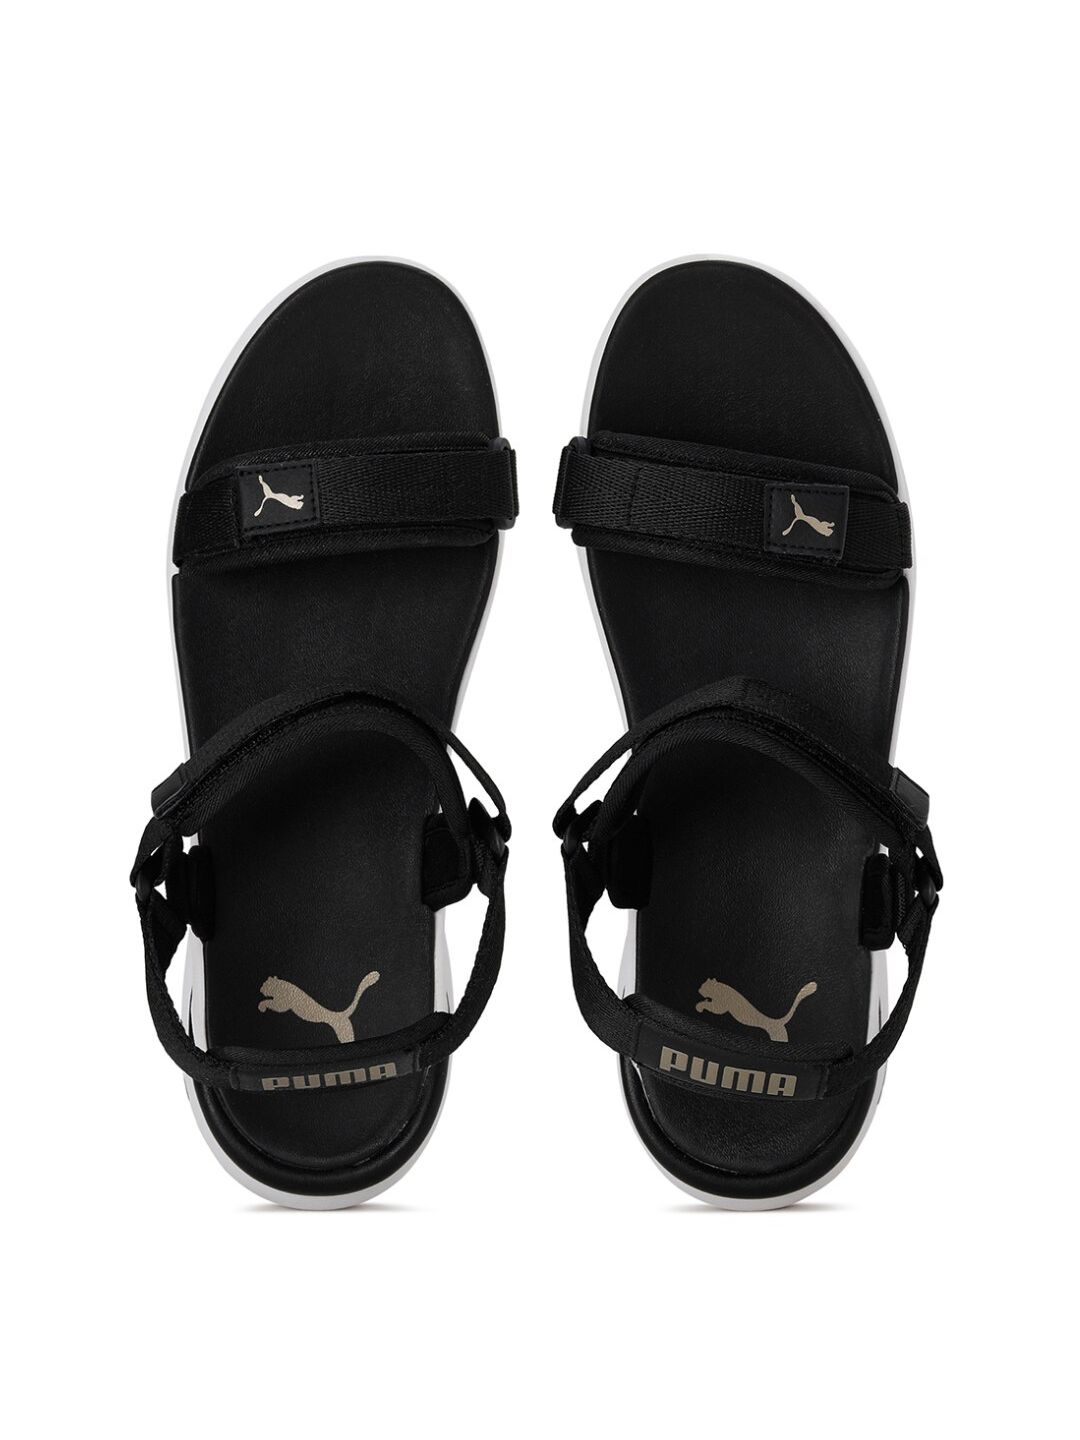 Puma Women Black & White Sports Sandals Price in India